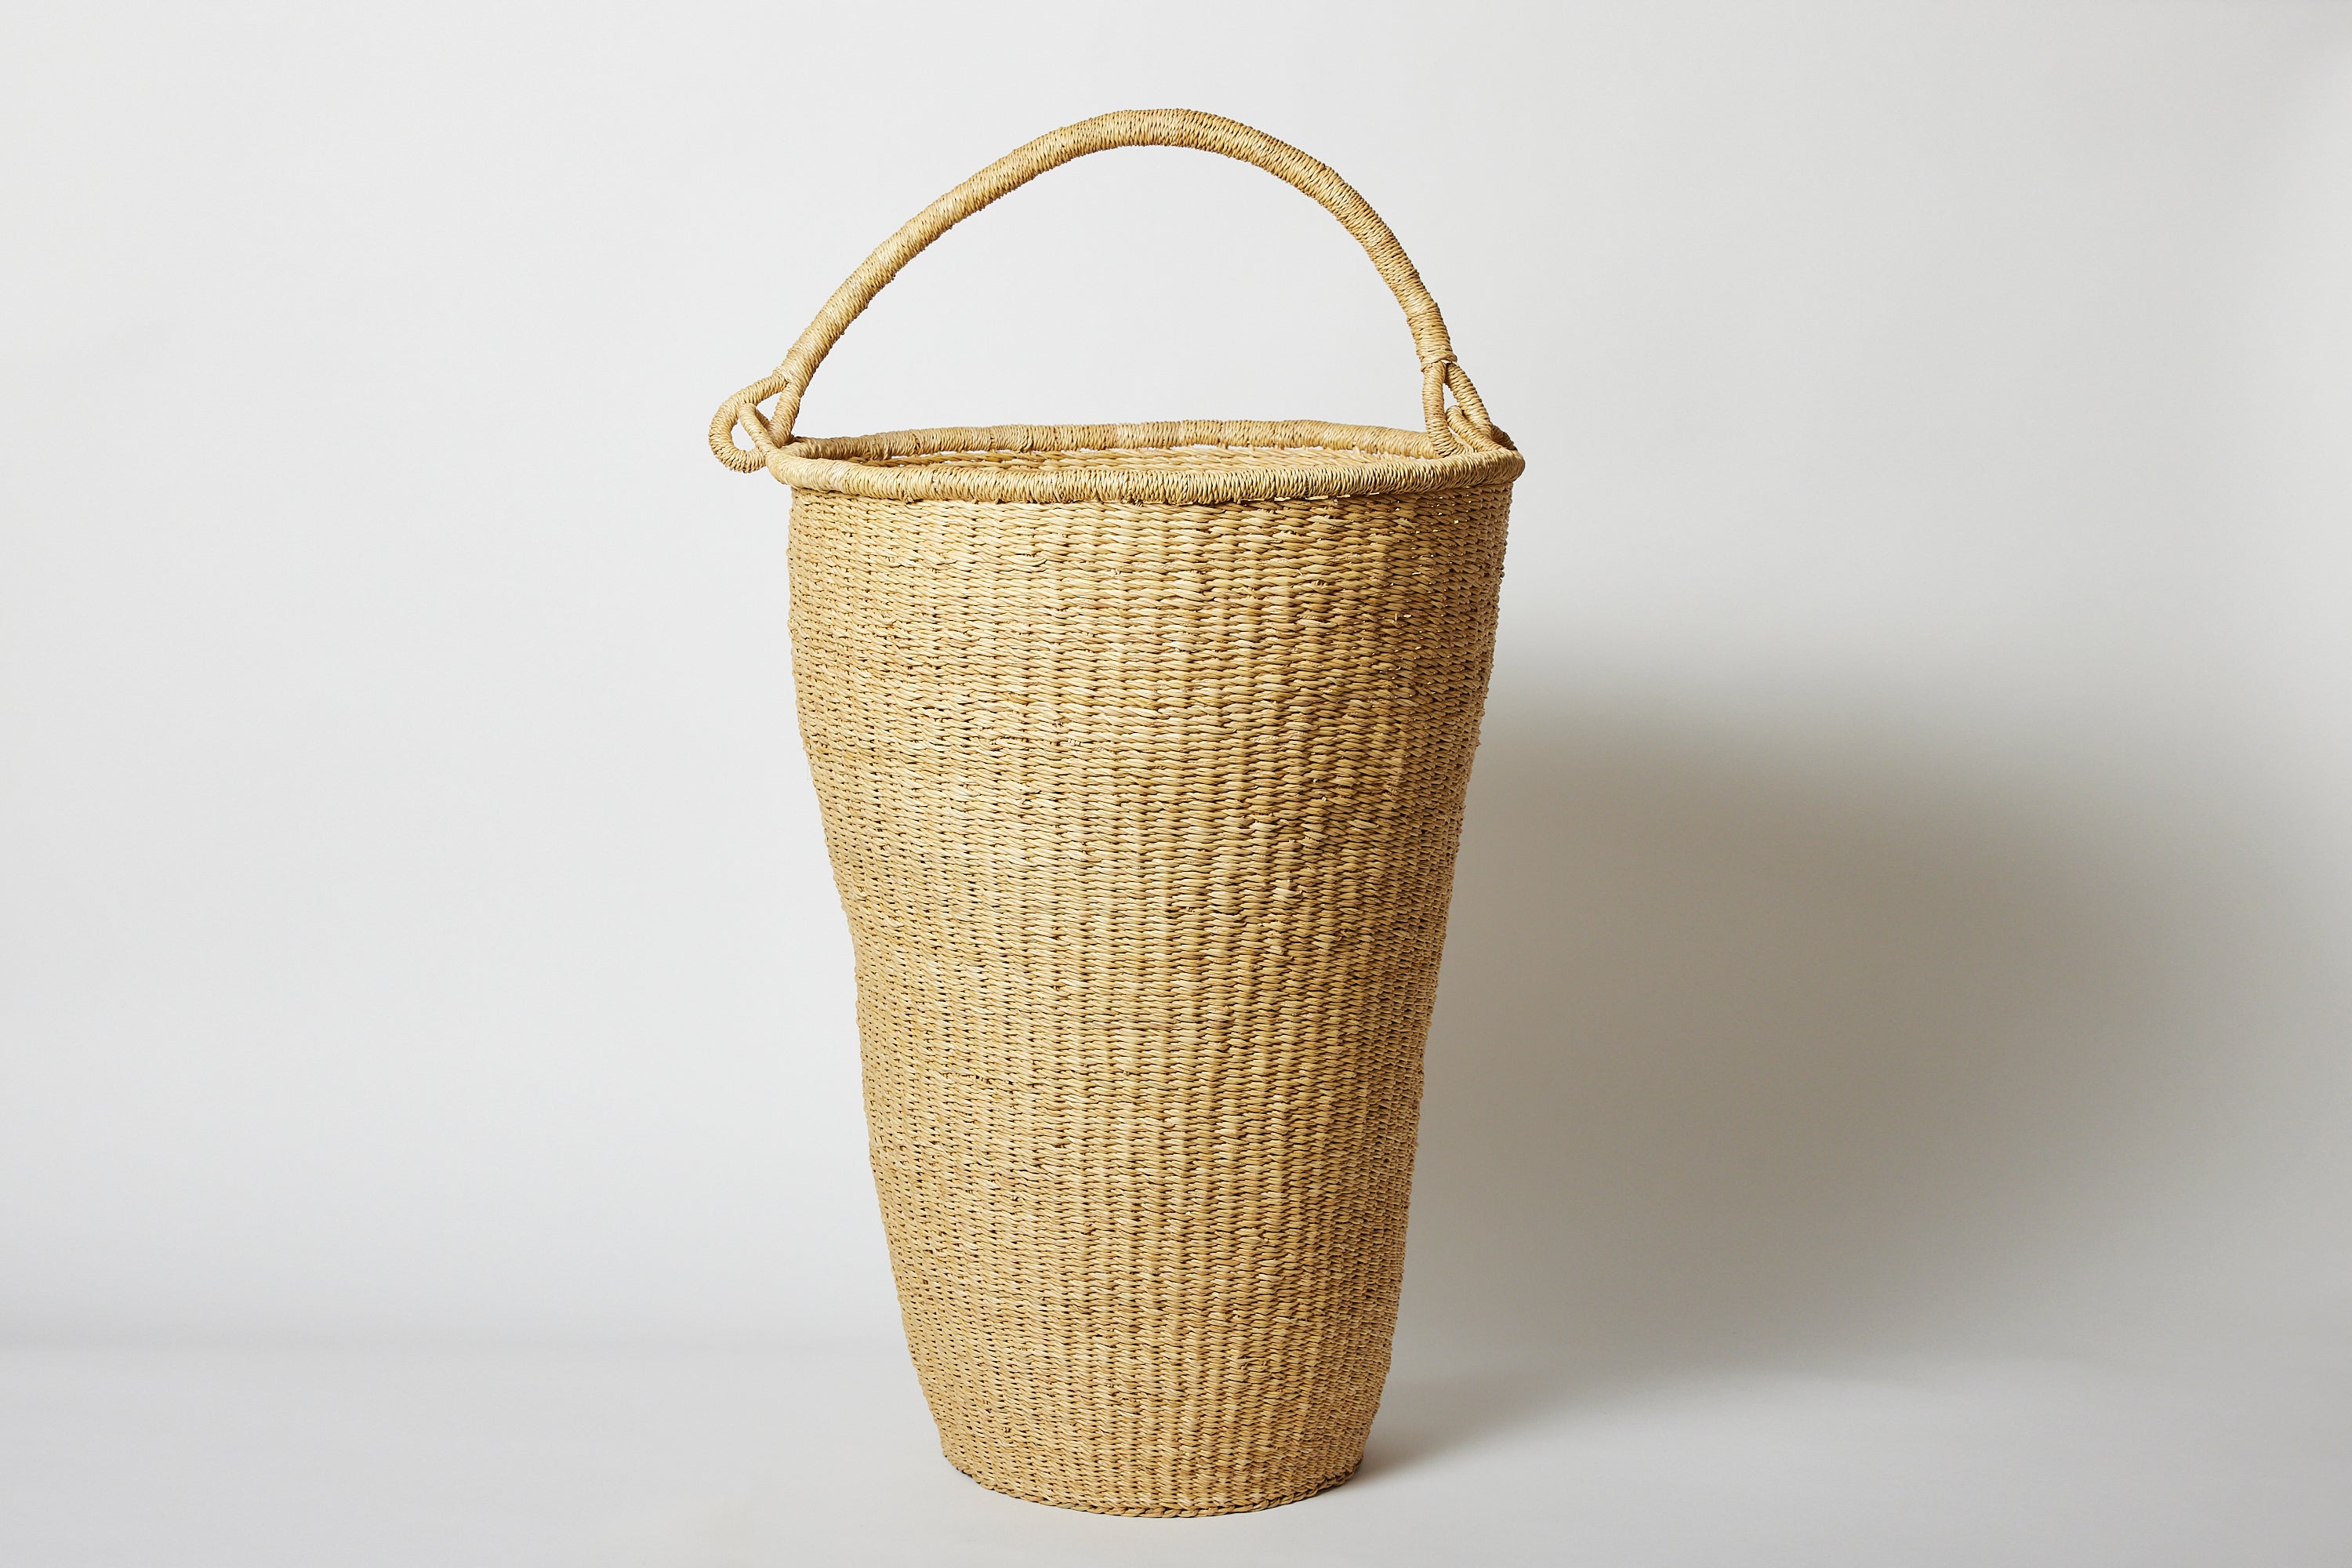 Giant Elephant Grass Basket